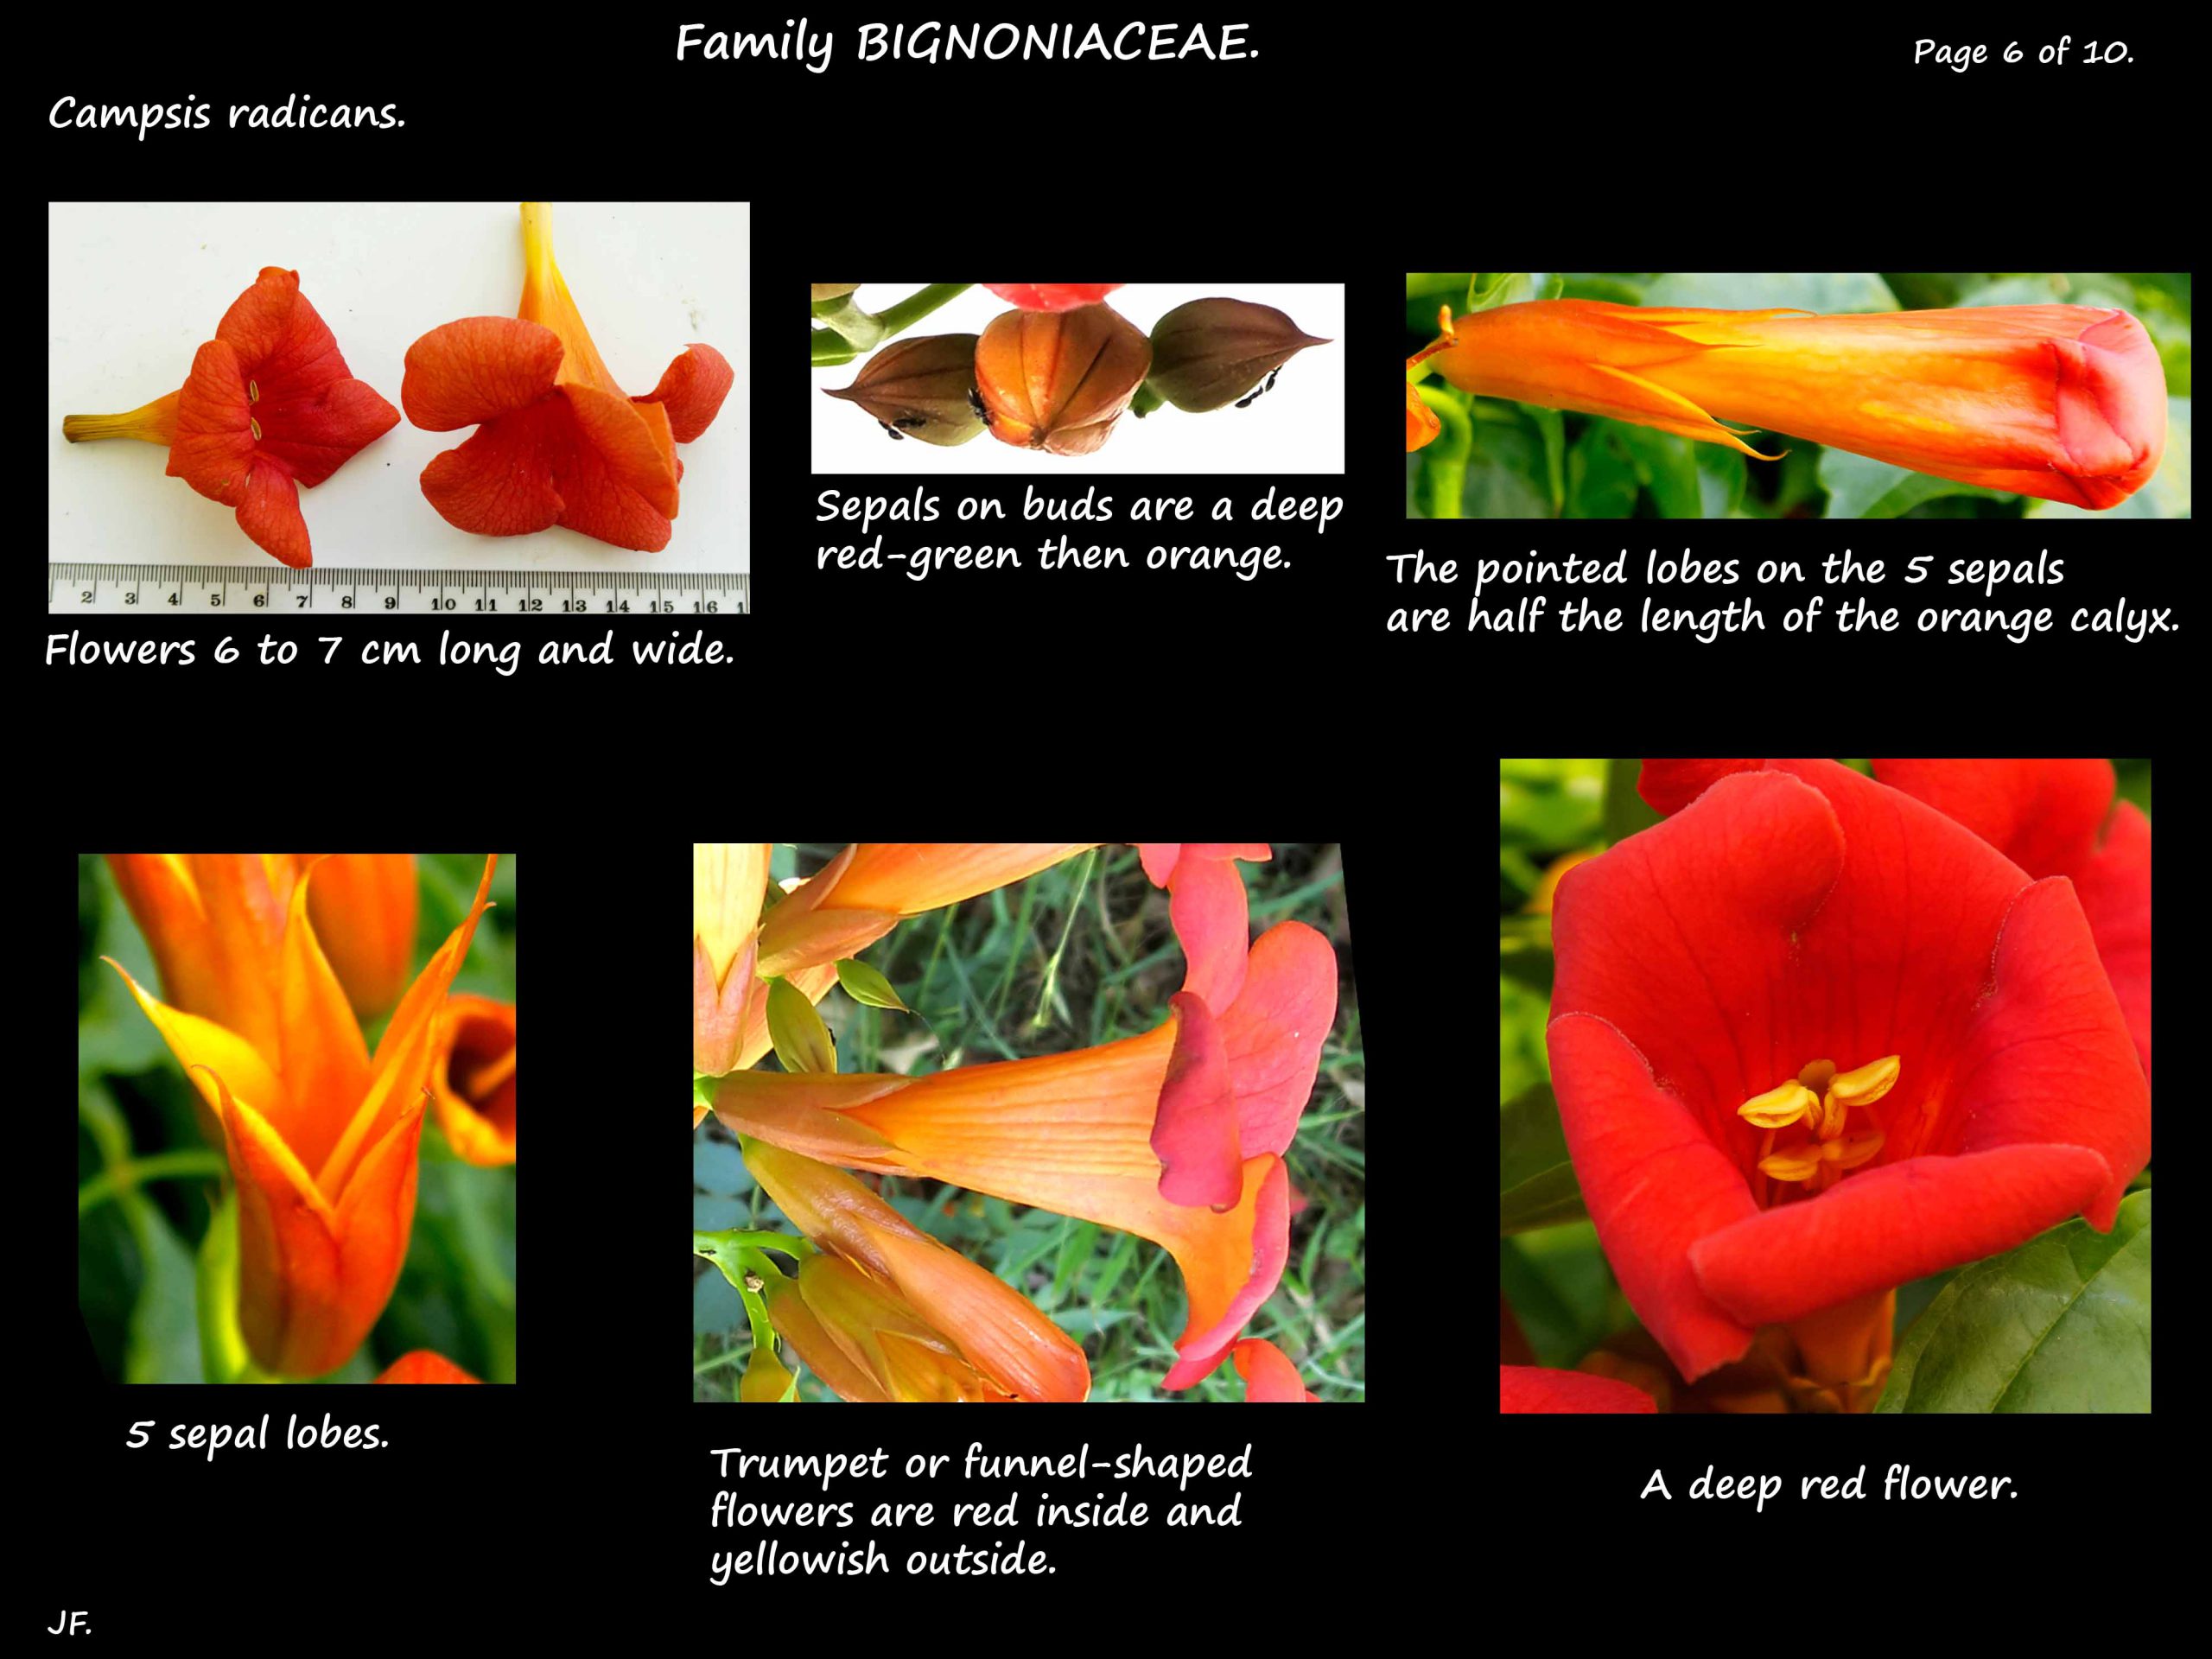 6 Campsis radicans flowers